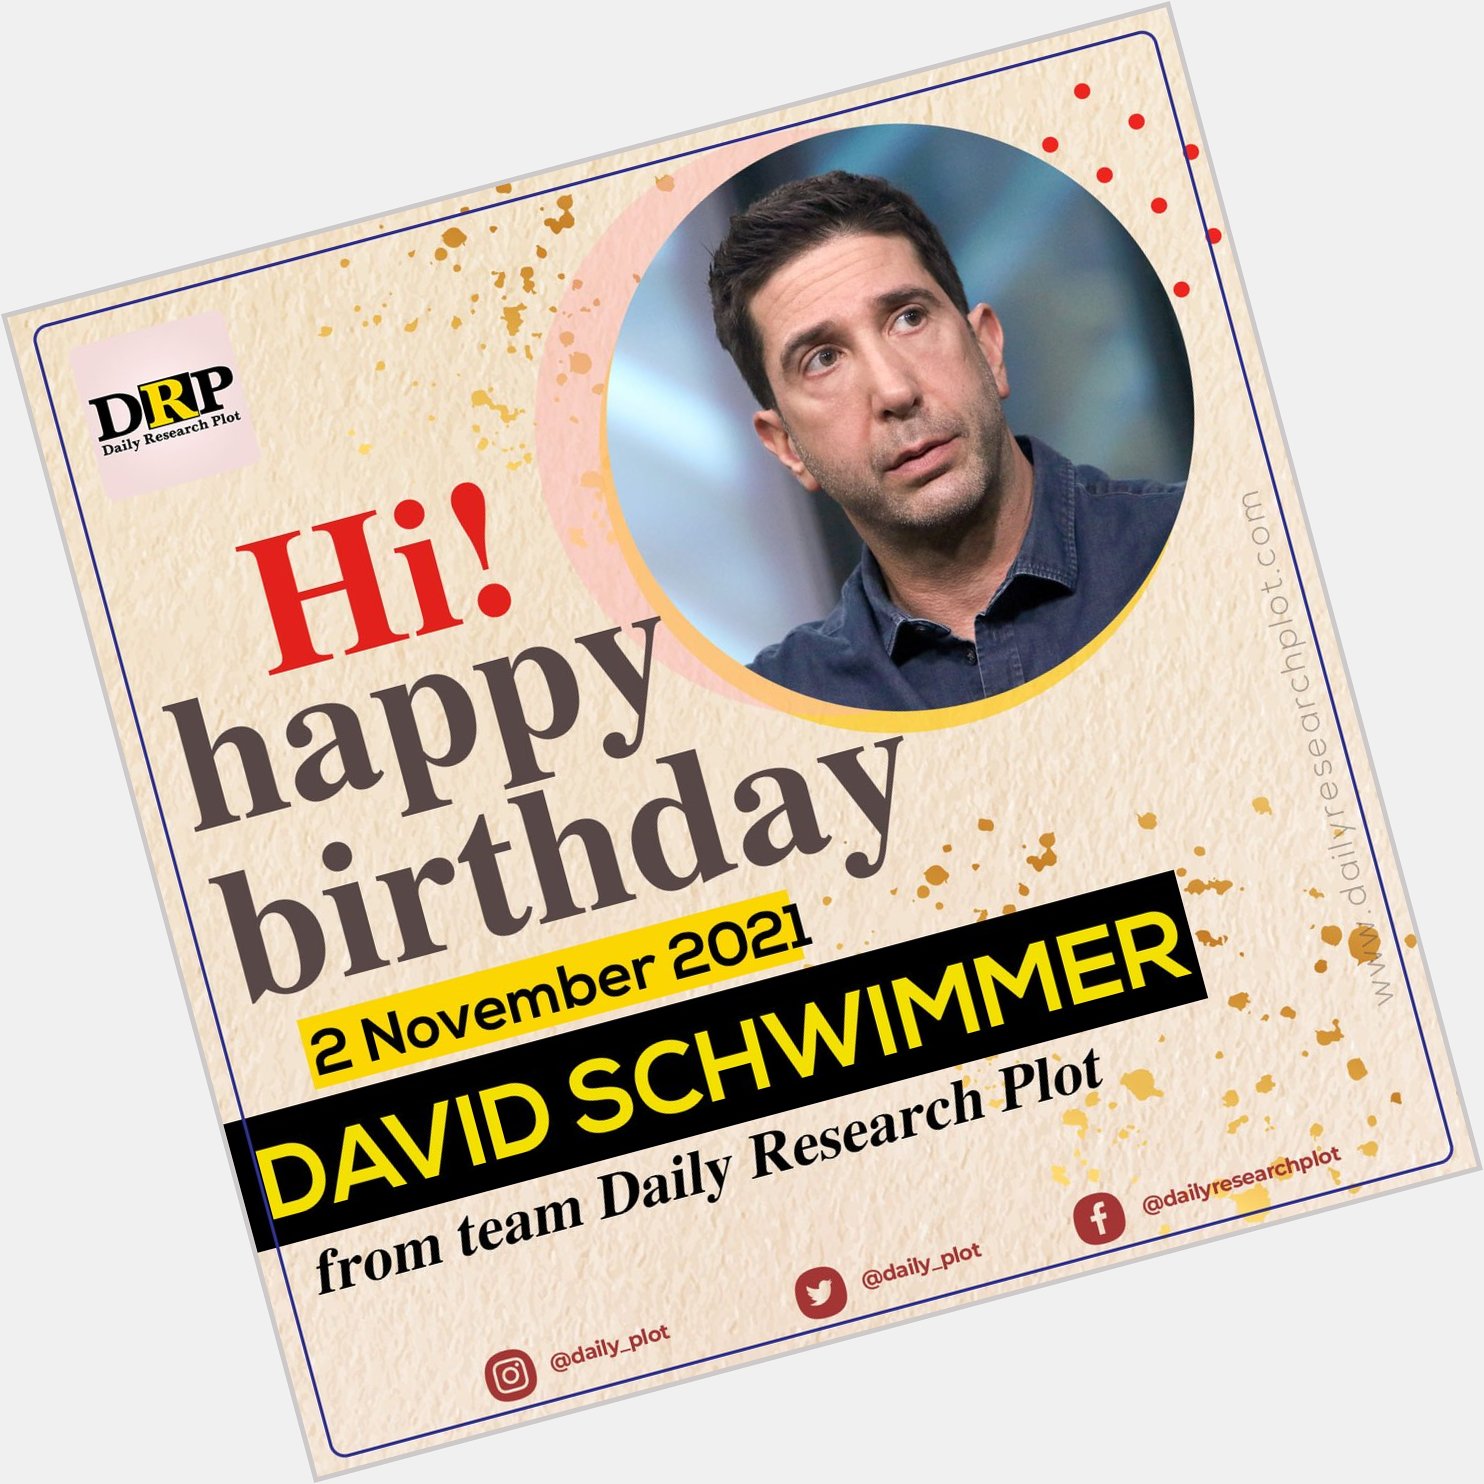 Happy Birthday!
David Schwimmer 